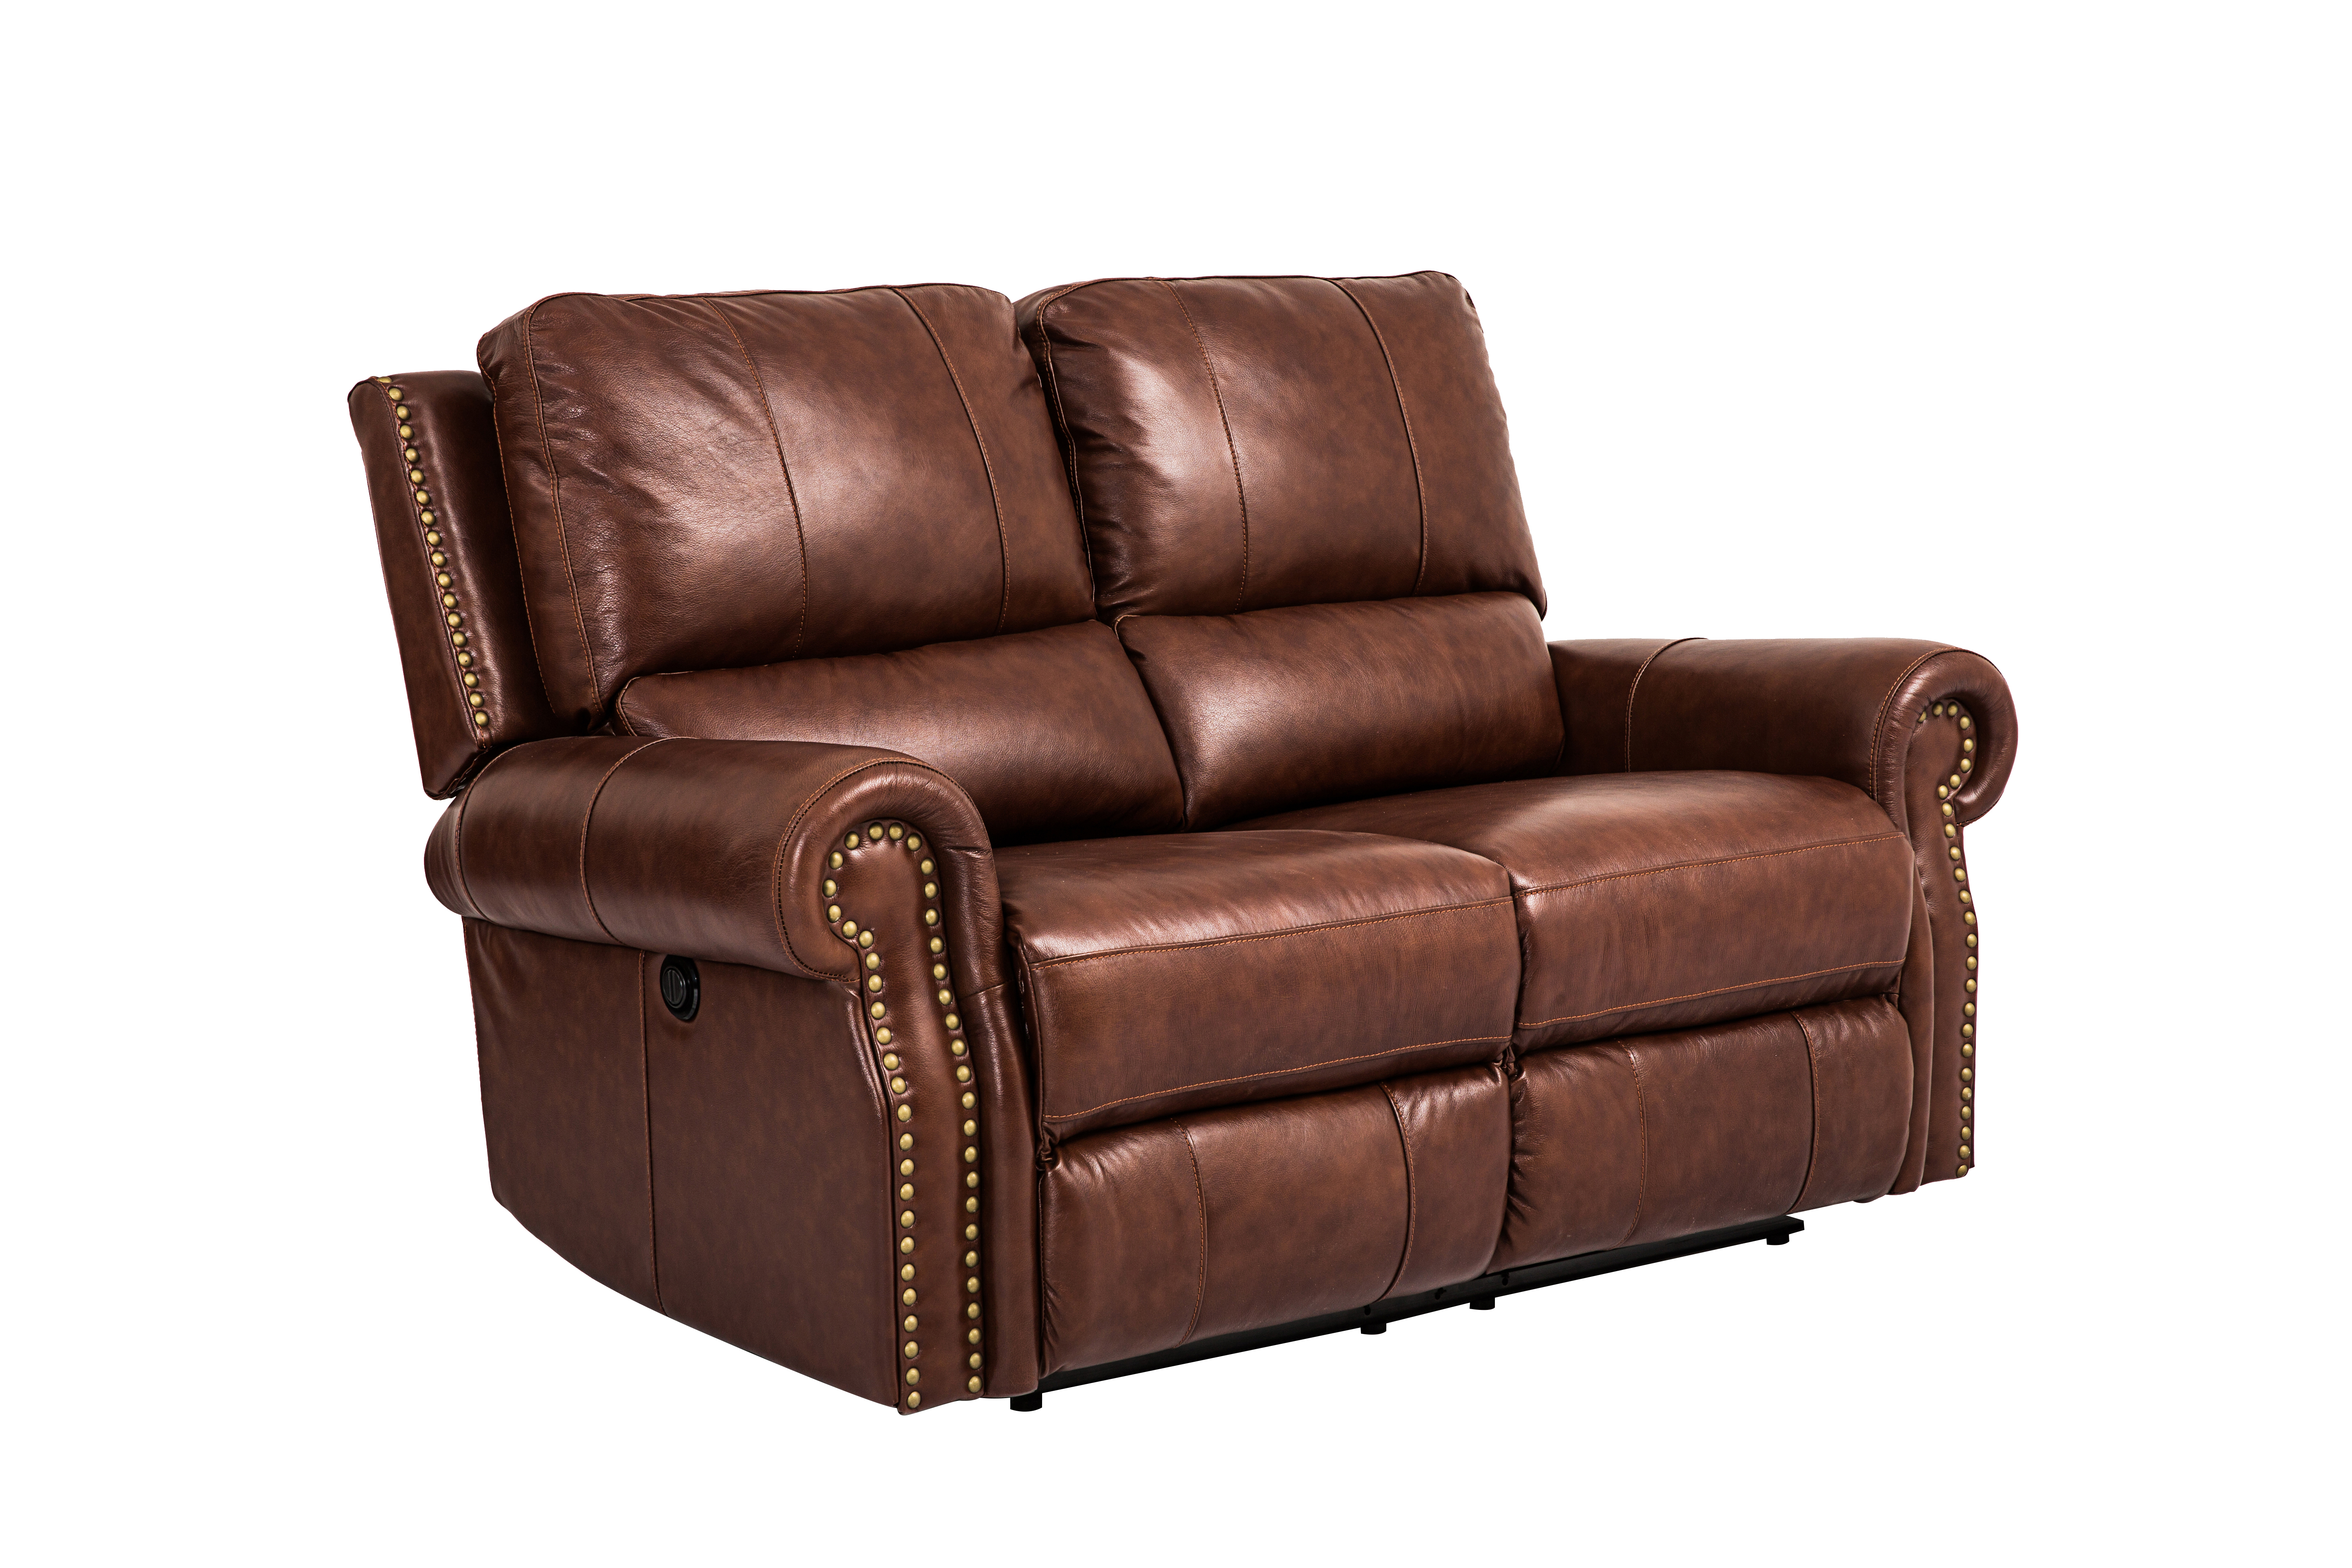 man wah leather sofa